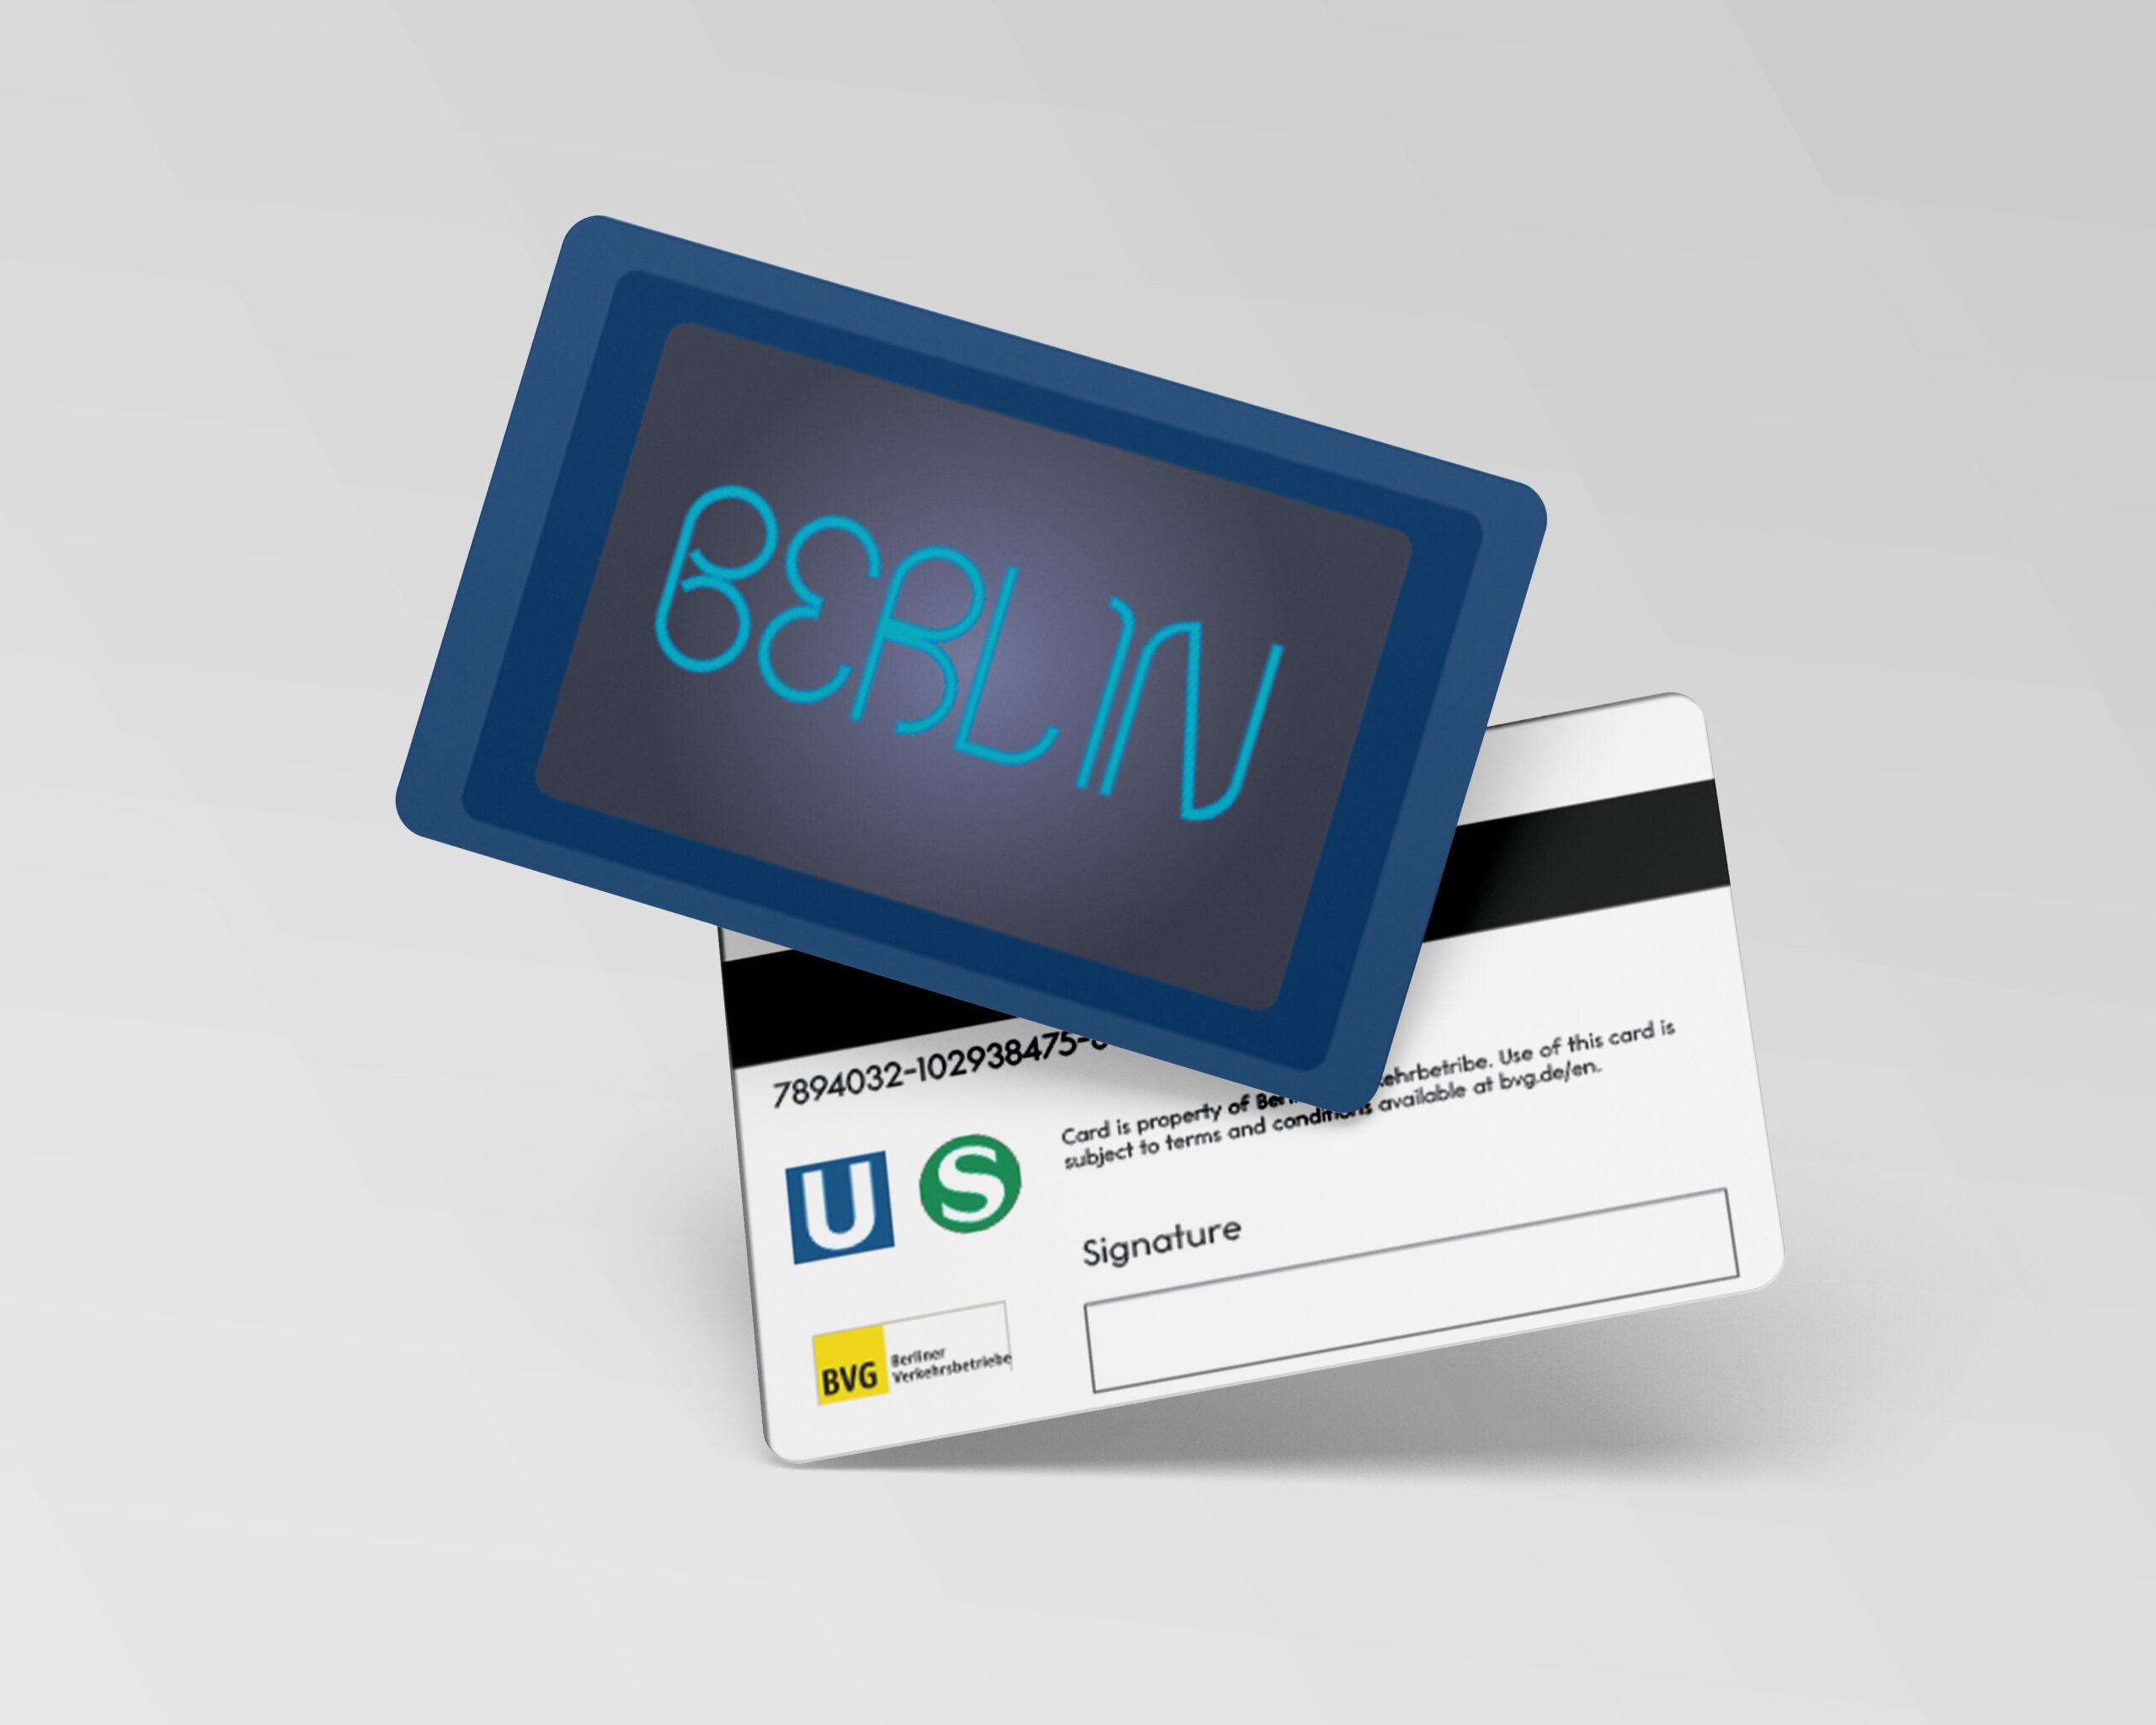 Metro card design for Berlin